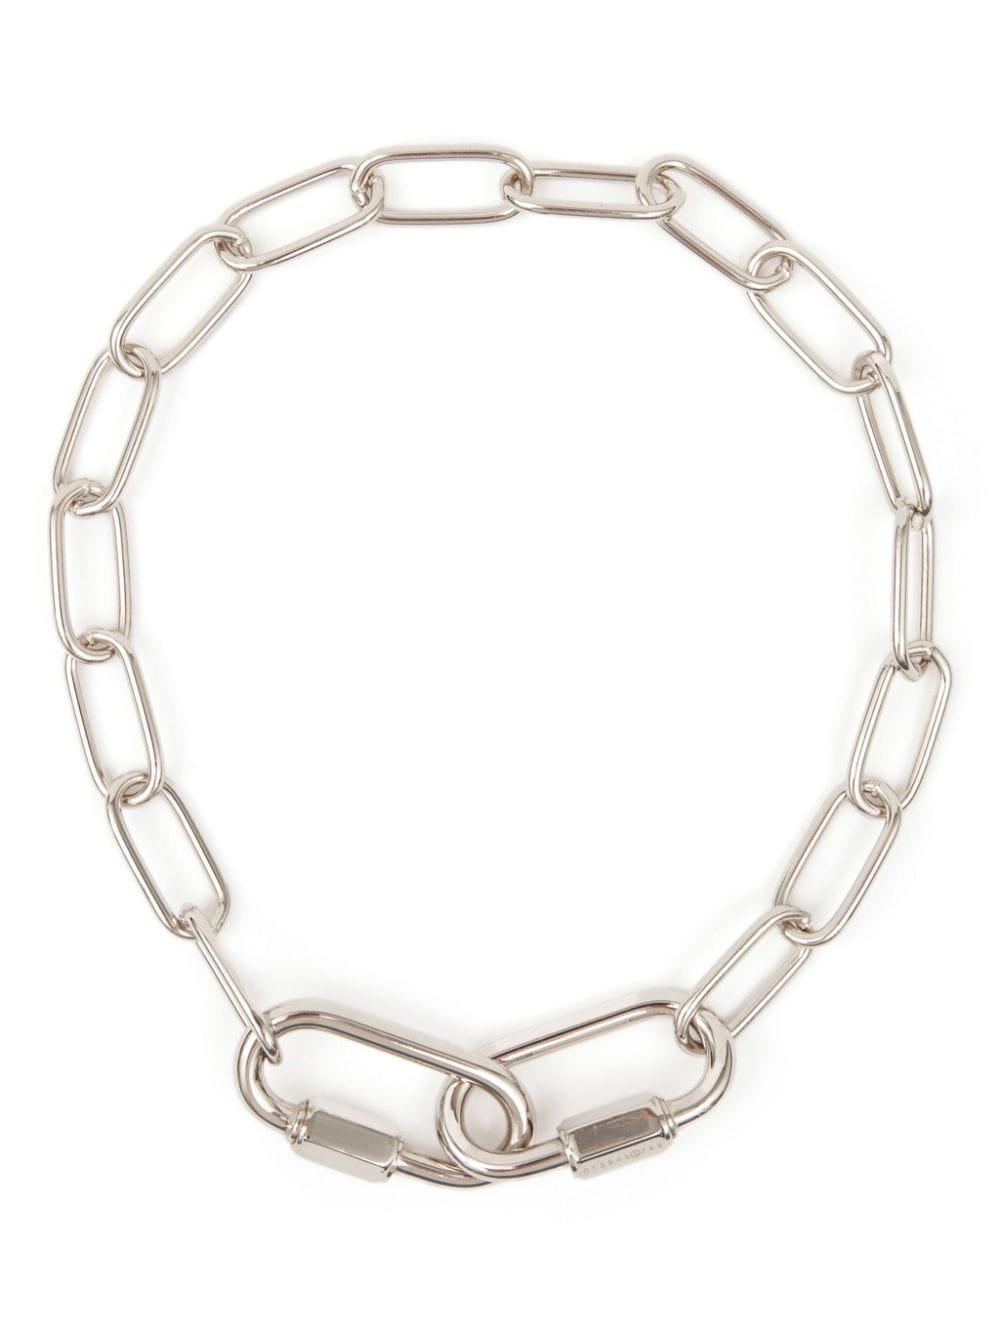 MM6 Maison Margiela chain-link necklace - Silver von MM6 Maison Margiela